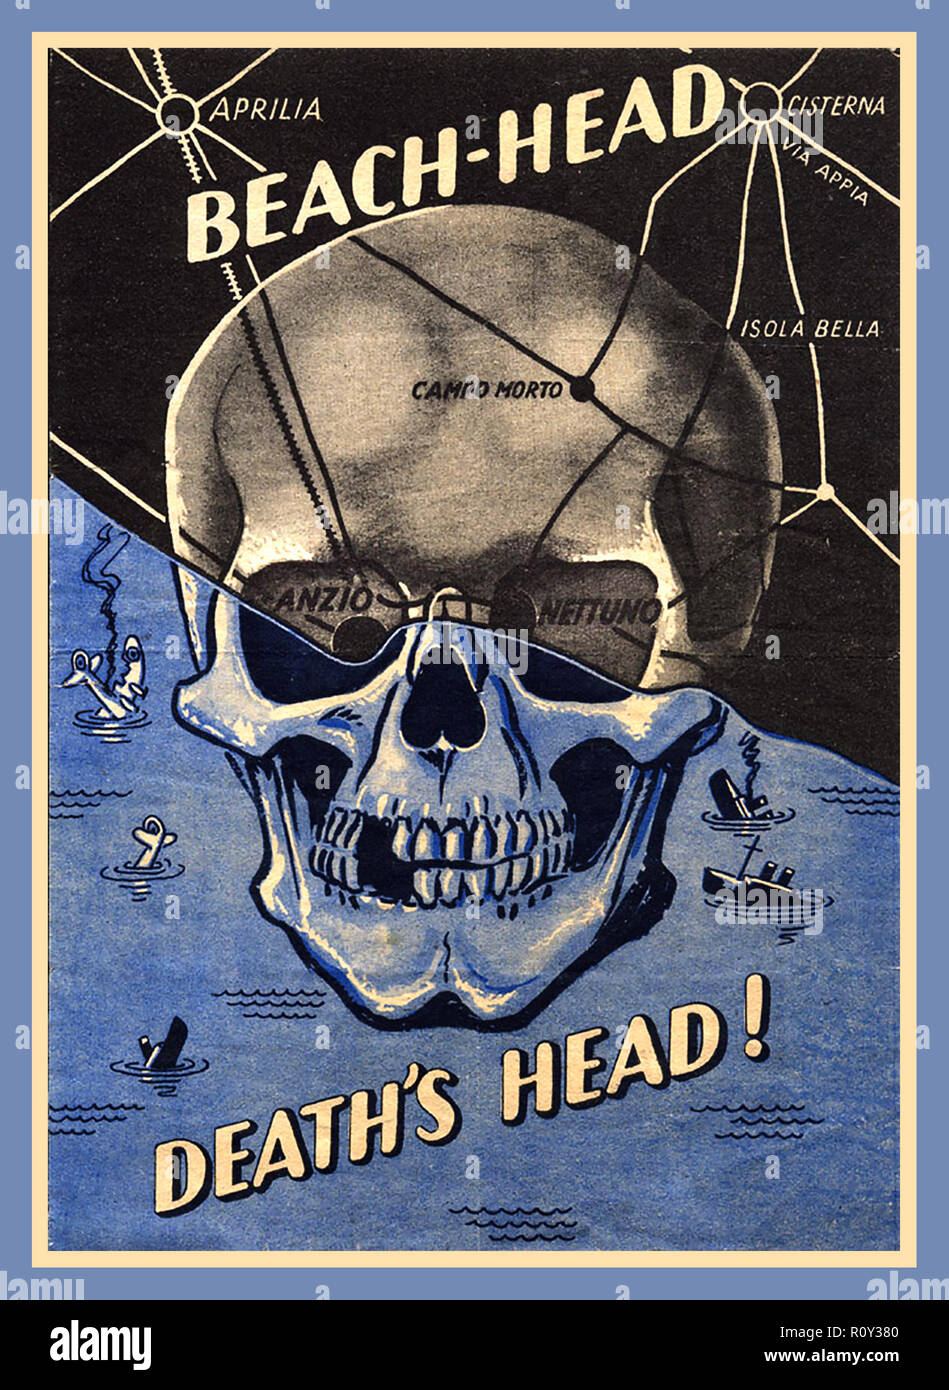 Anzio Allied Invasion Nazi Germany Ww2 Propaganda Poster